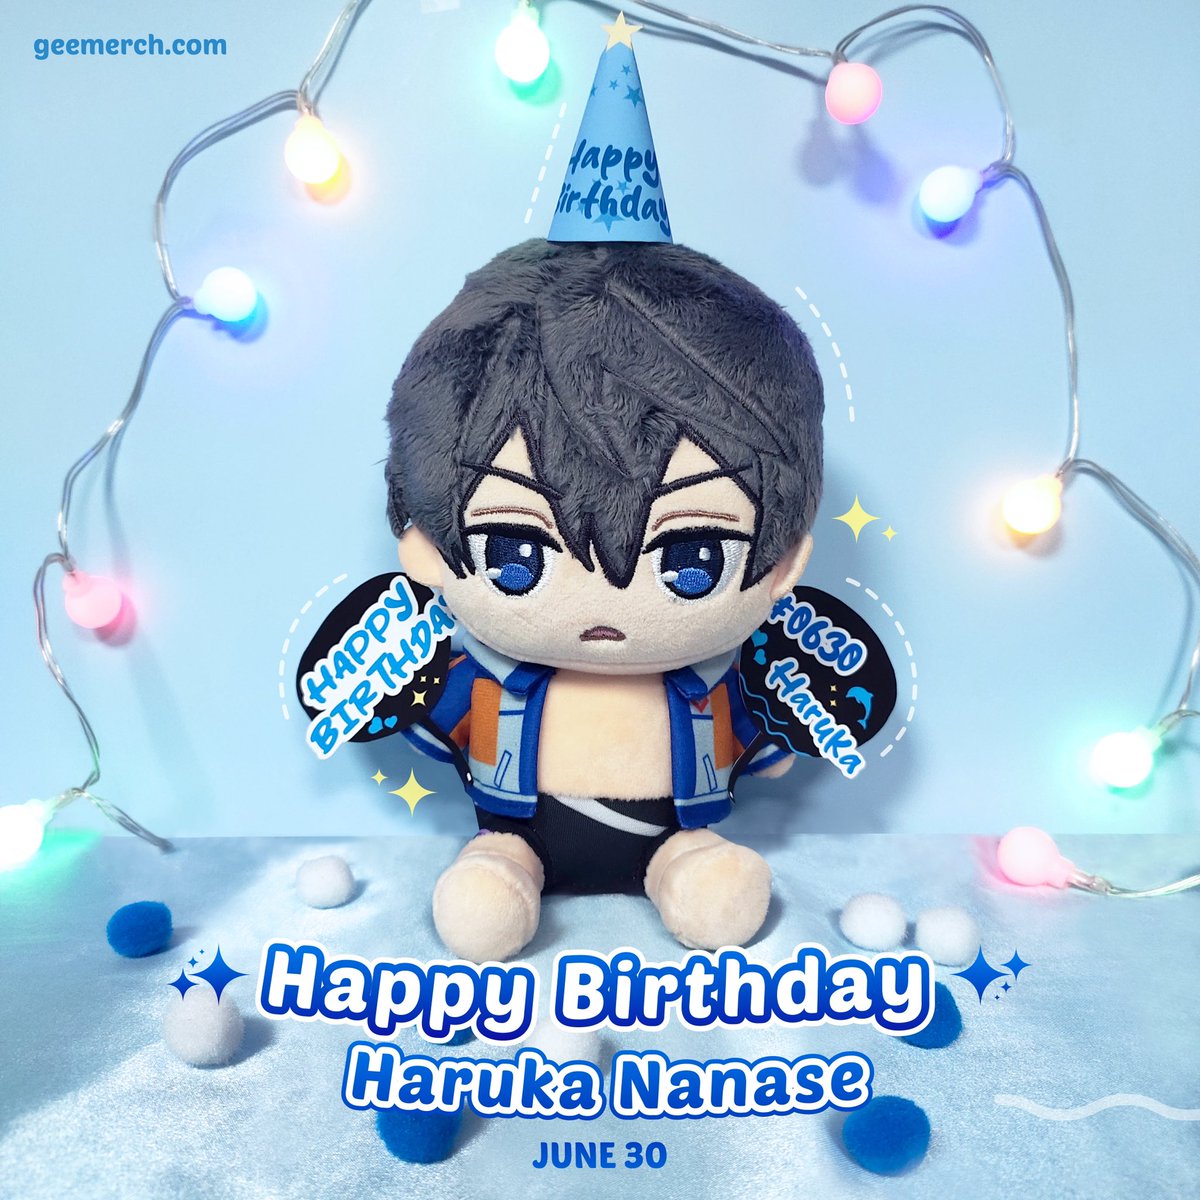 Happy birthday Haruka!

Who else is excited for Free!’s 10th anniversary?

#freeanime #tv_free #harukananase #haruka #フリー